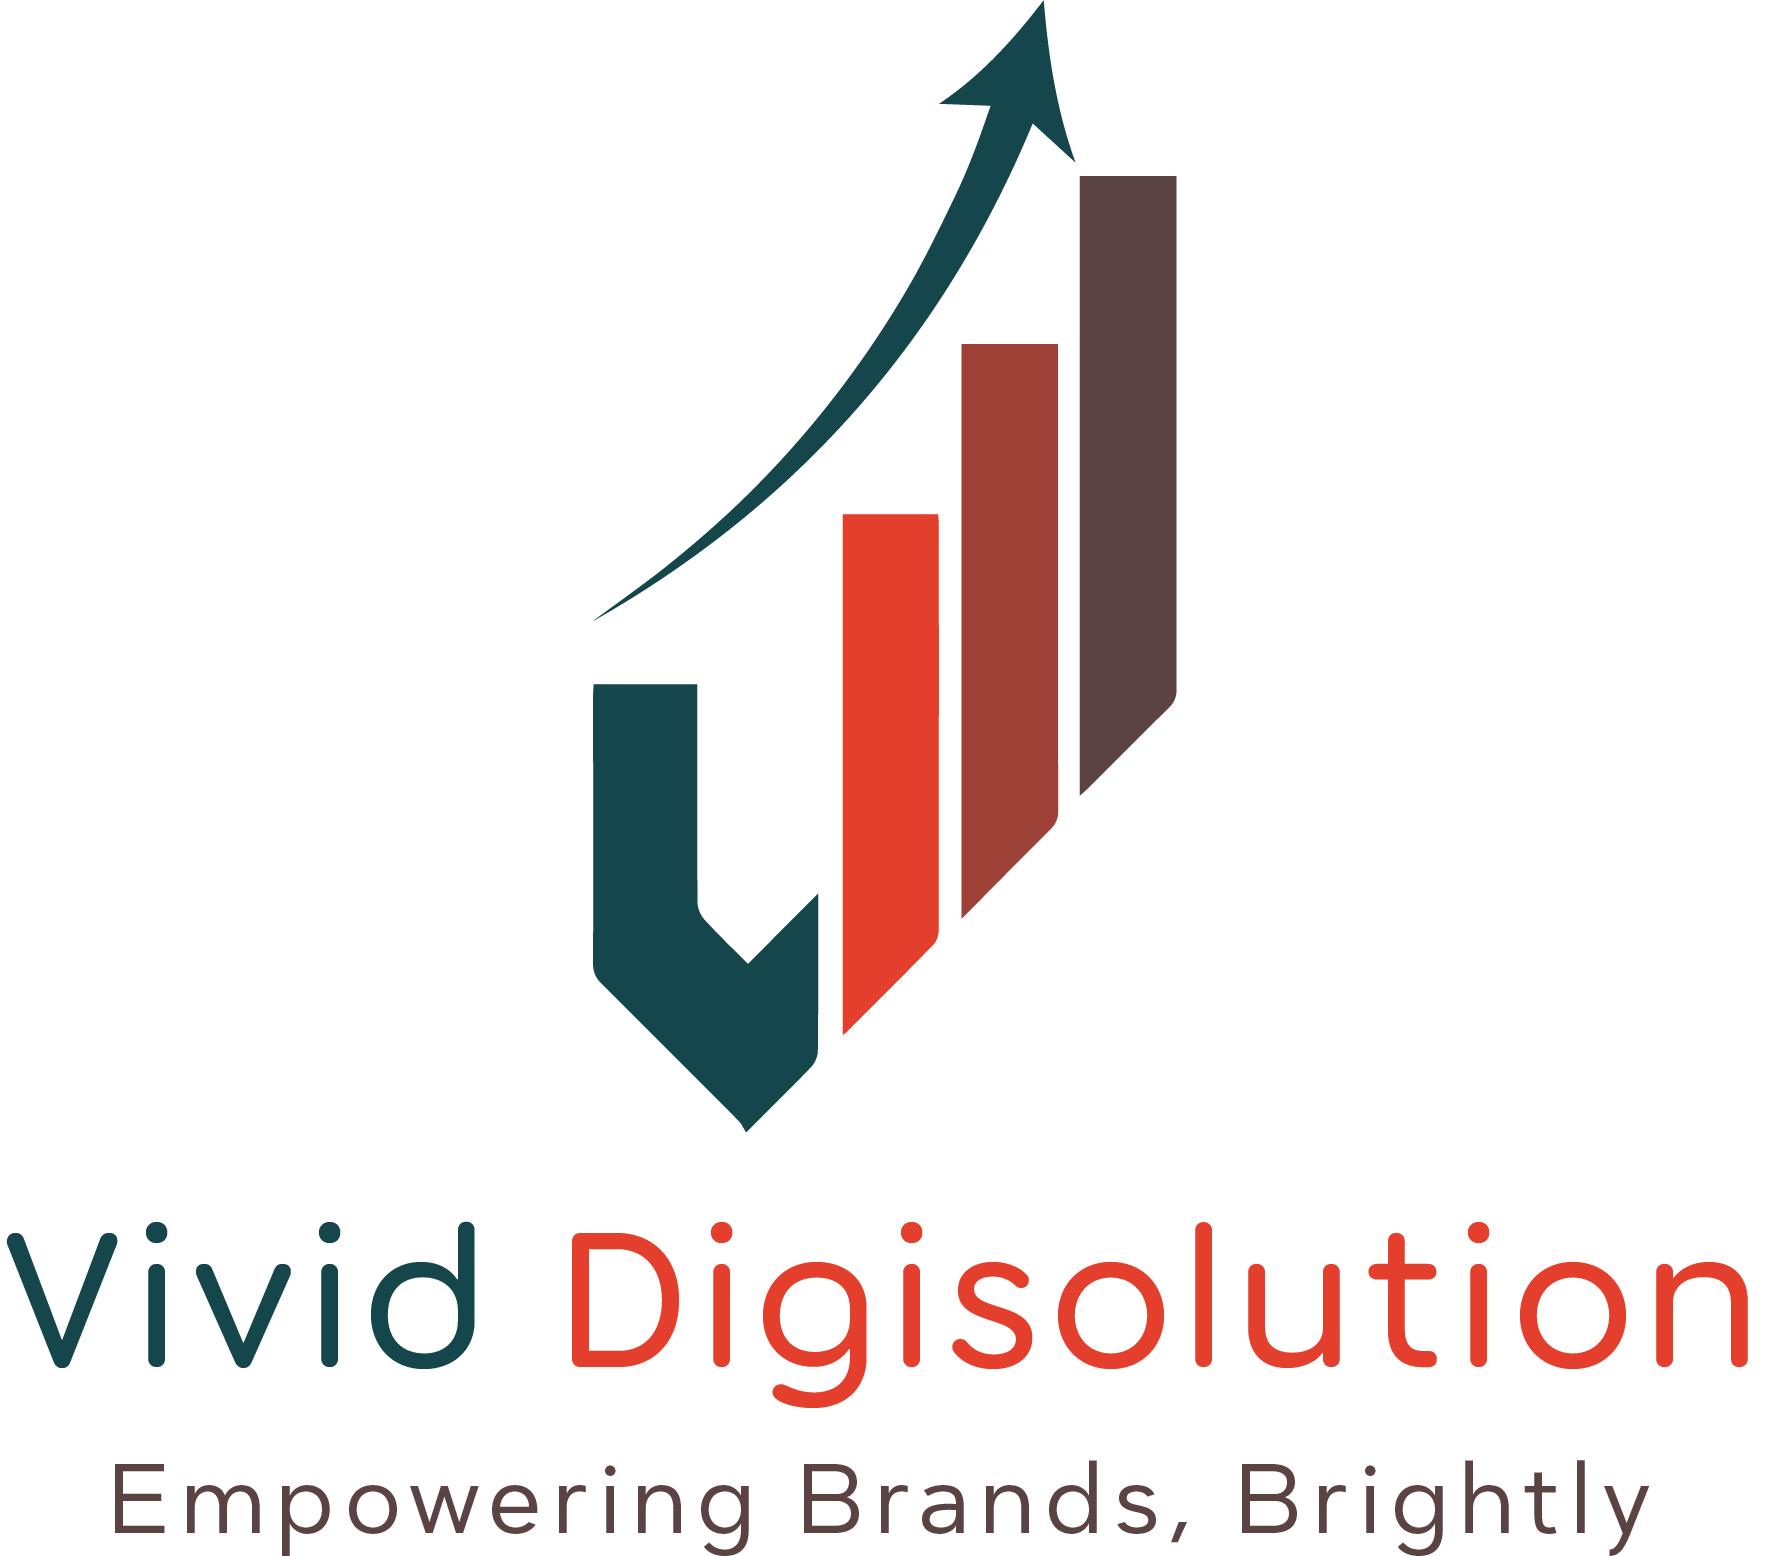 Vivid Digisolution|IT Services|Professional Services